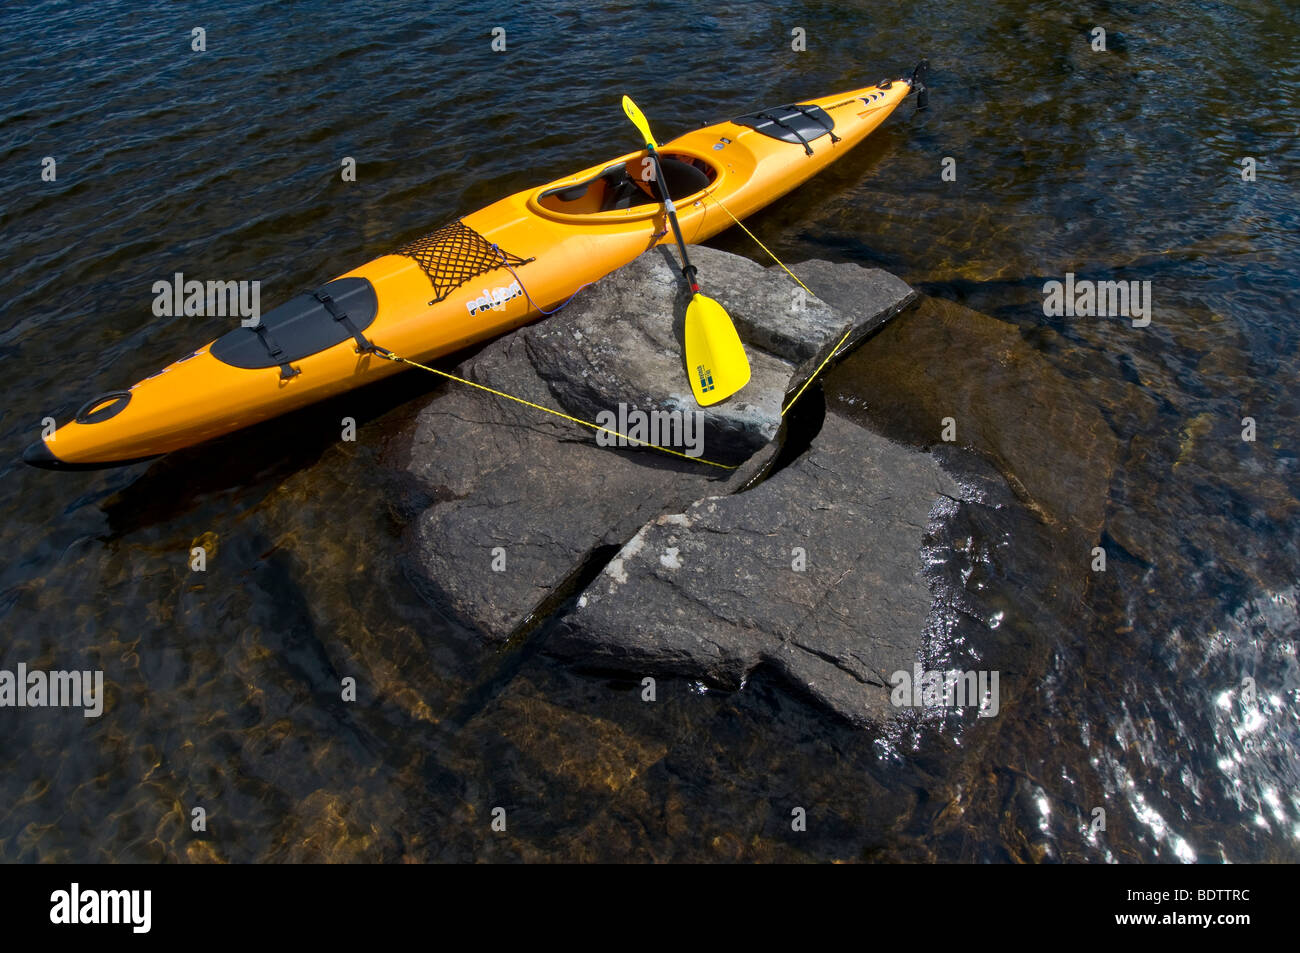 kajak, naturreservat rogen, haerjedalen, schweden, kayak on river on lake in nature reserve, sweden Stock Photo